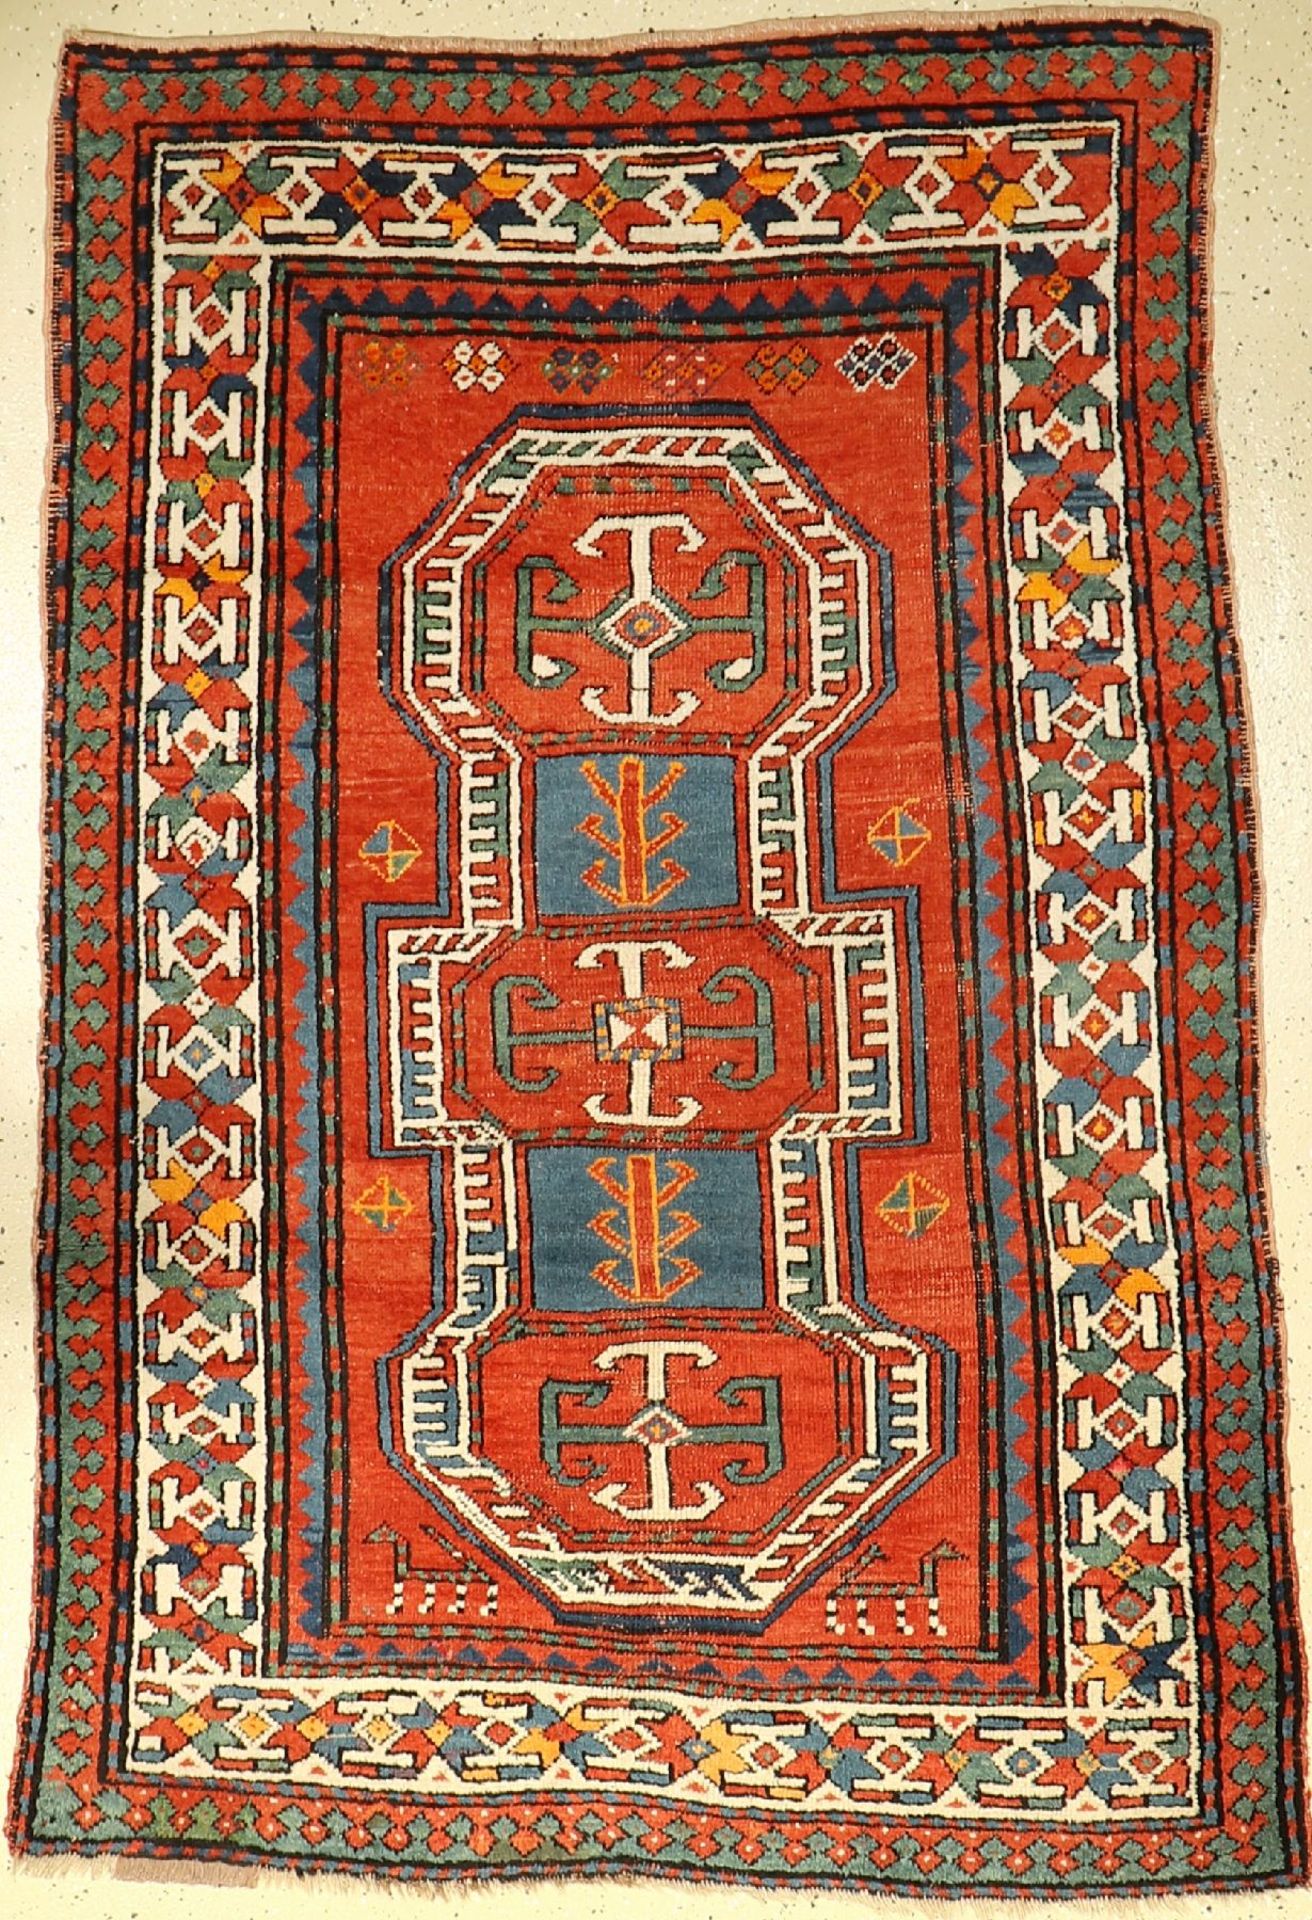 Antique Kazak, Caucasus, around 1900, wool on wool, approx. 195 x 128 cm, condition: 2-3. Auction: